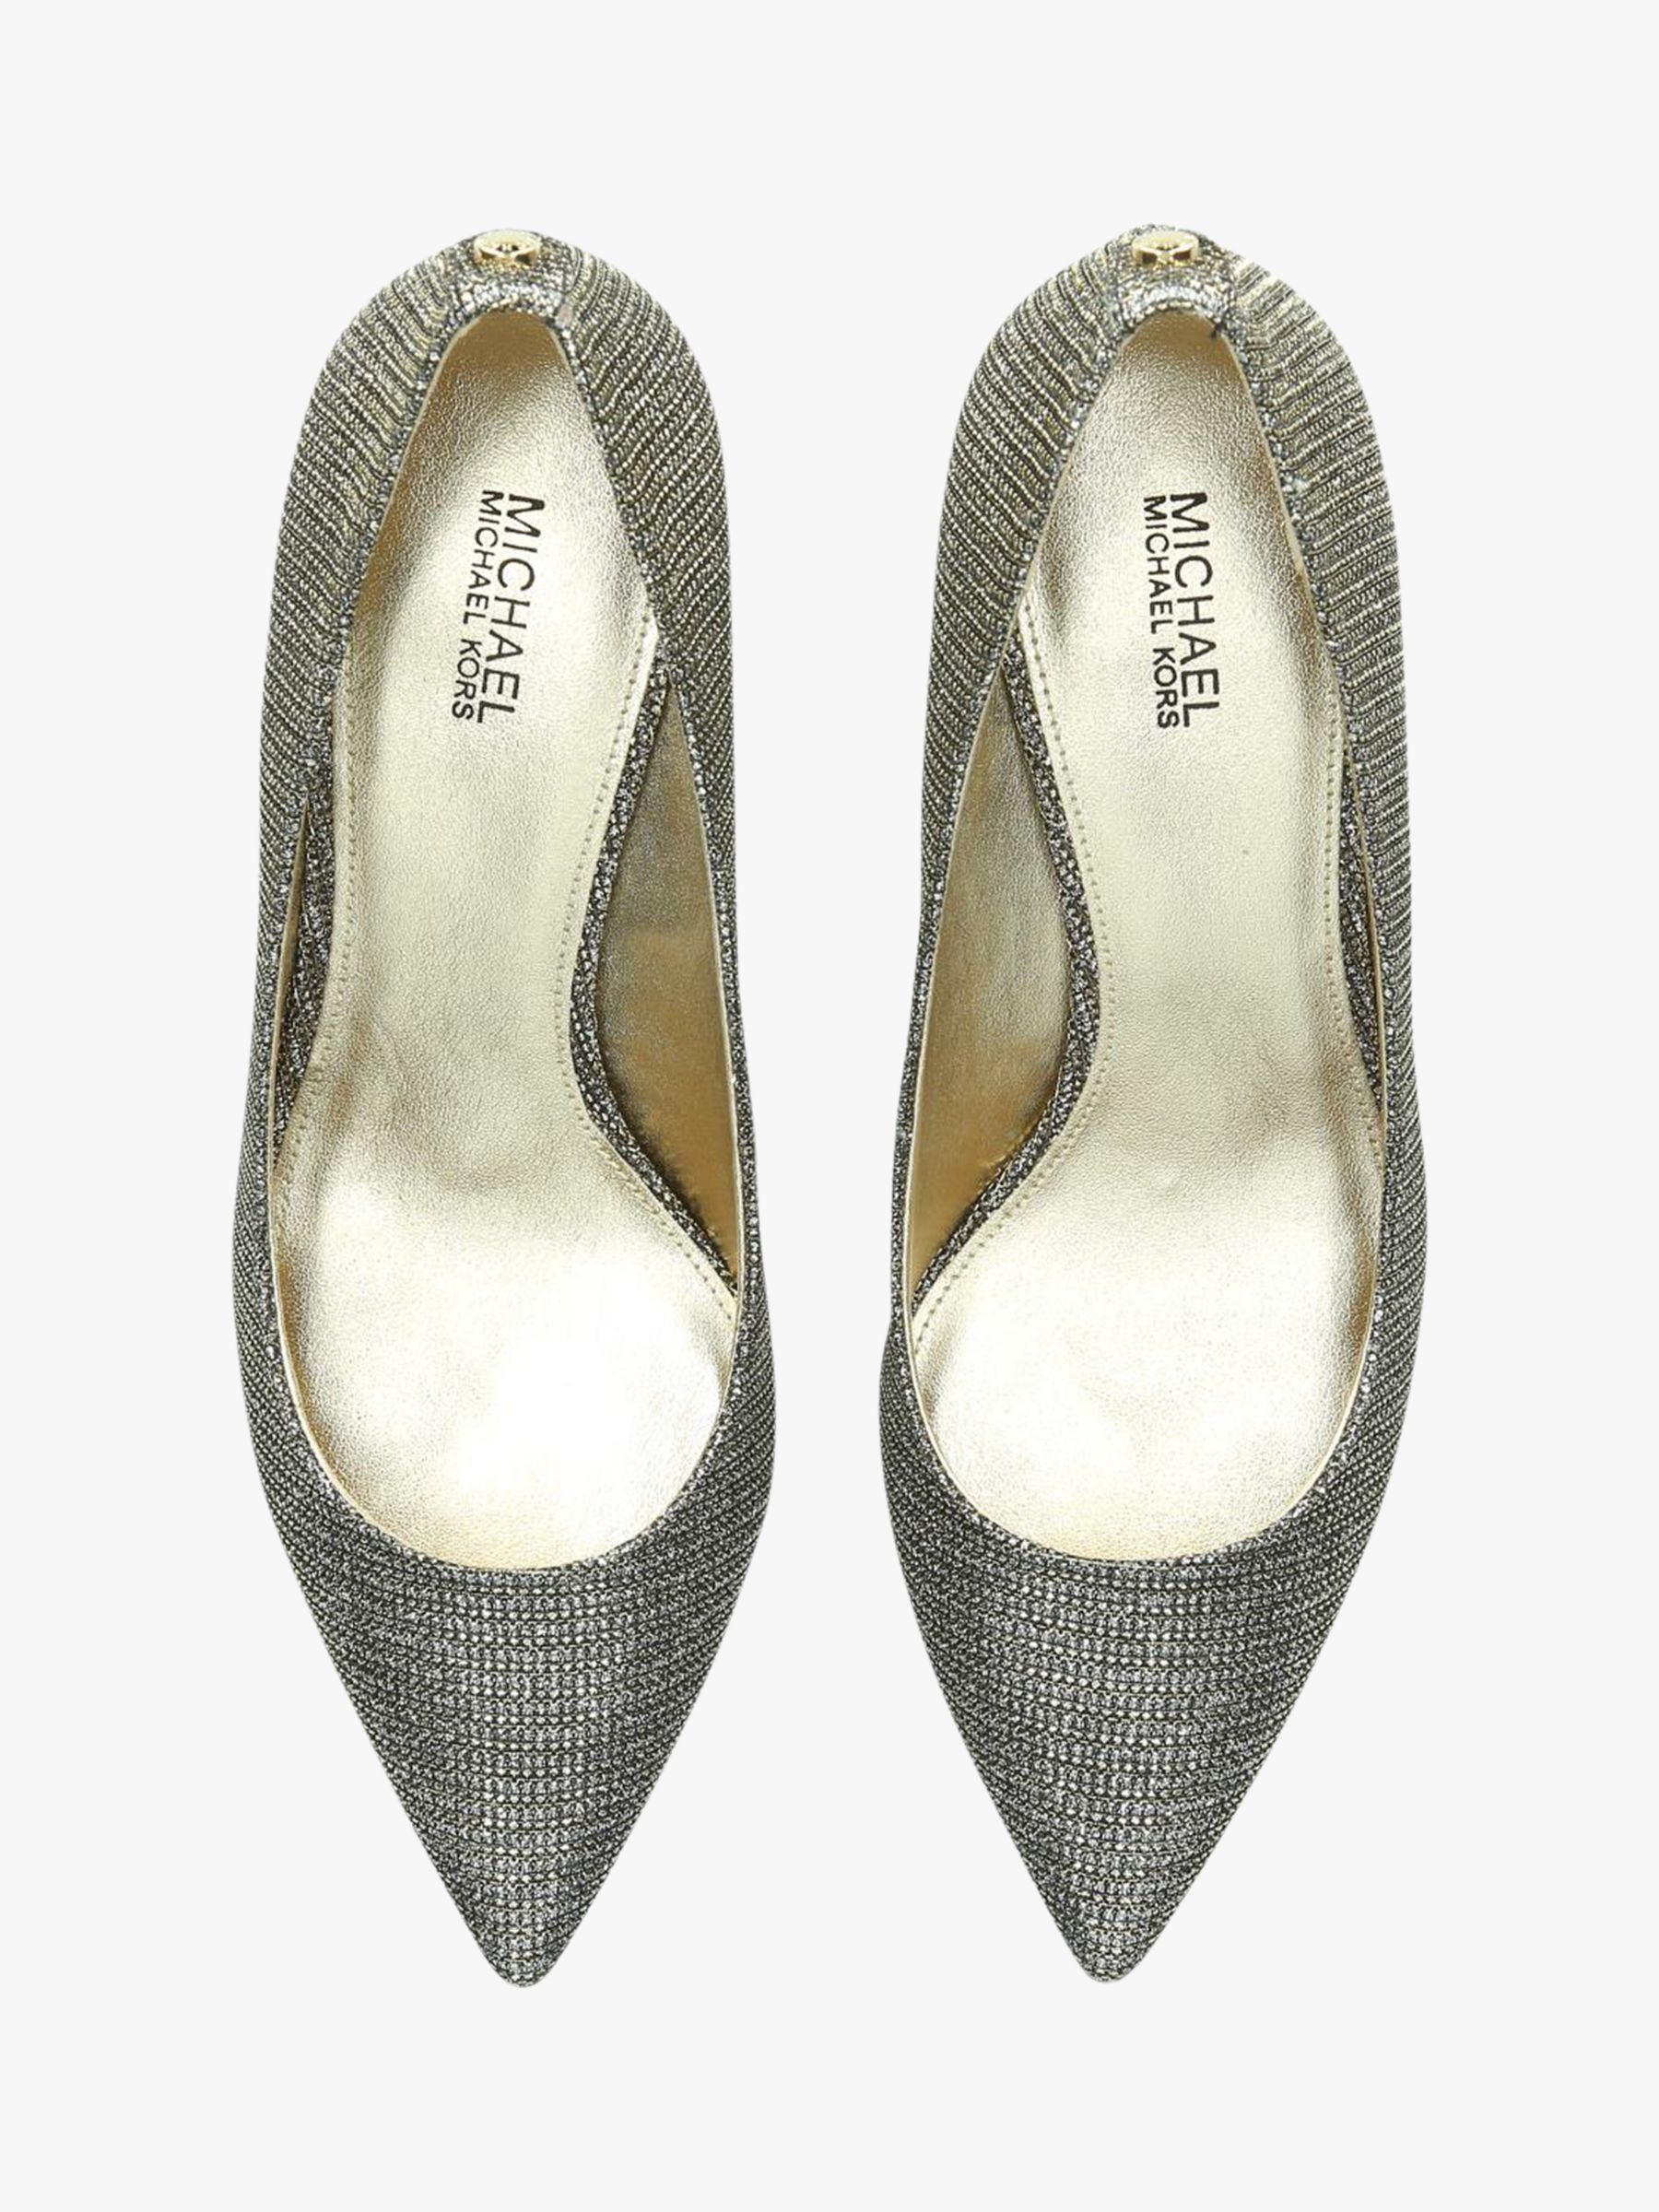 michael kors shoes silver heel